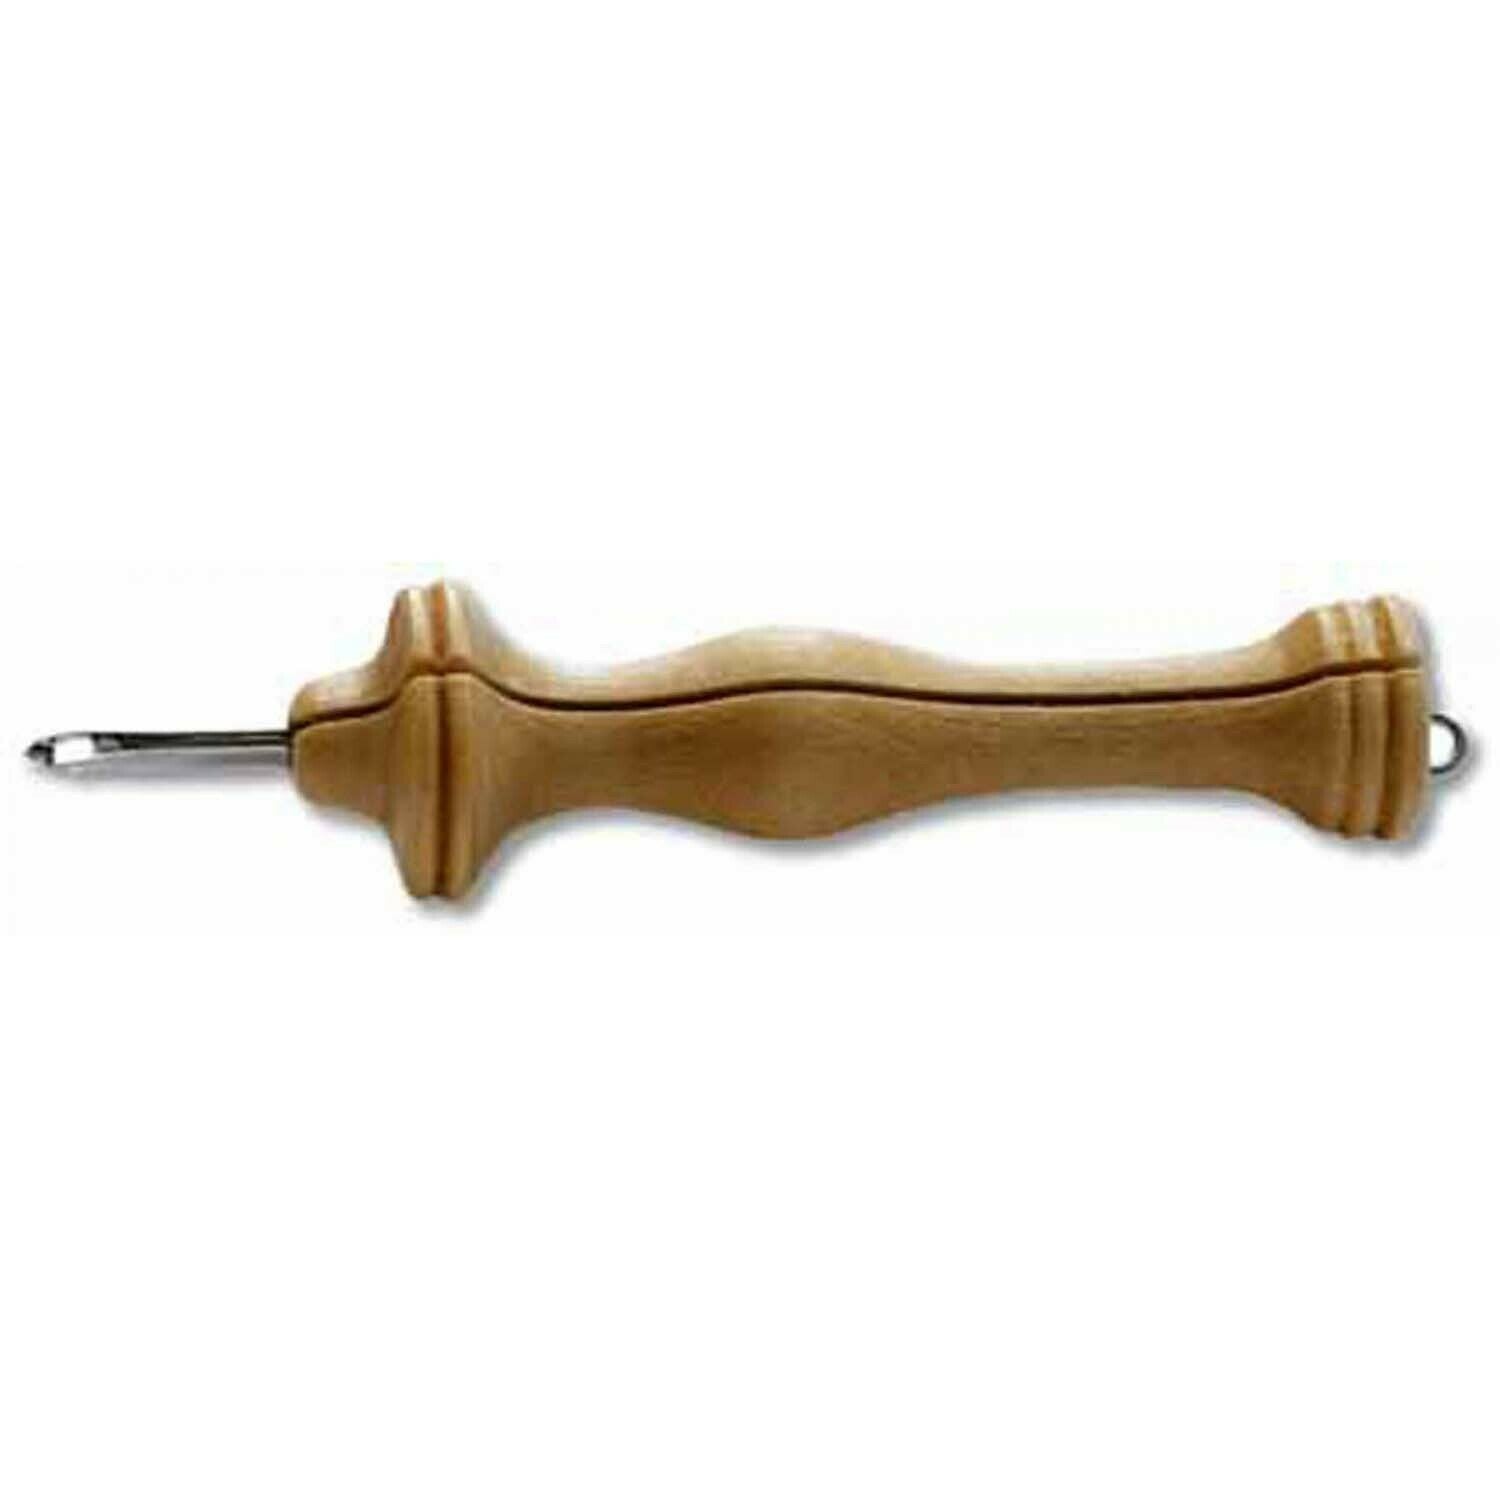 Oxford Rug Punchneedle - Size 14 - homesewn